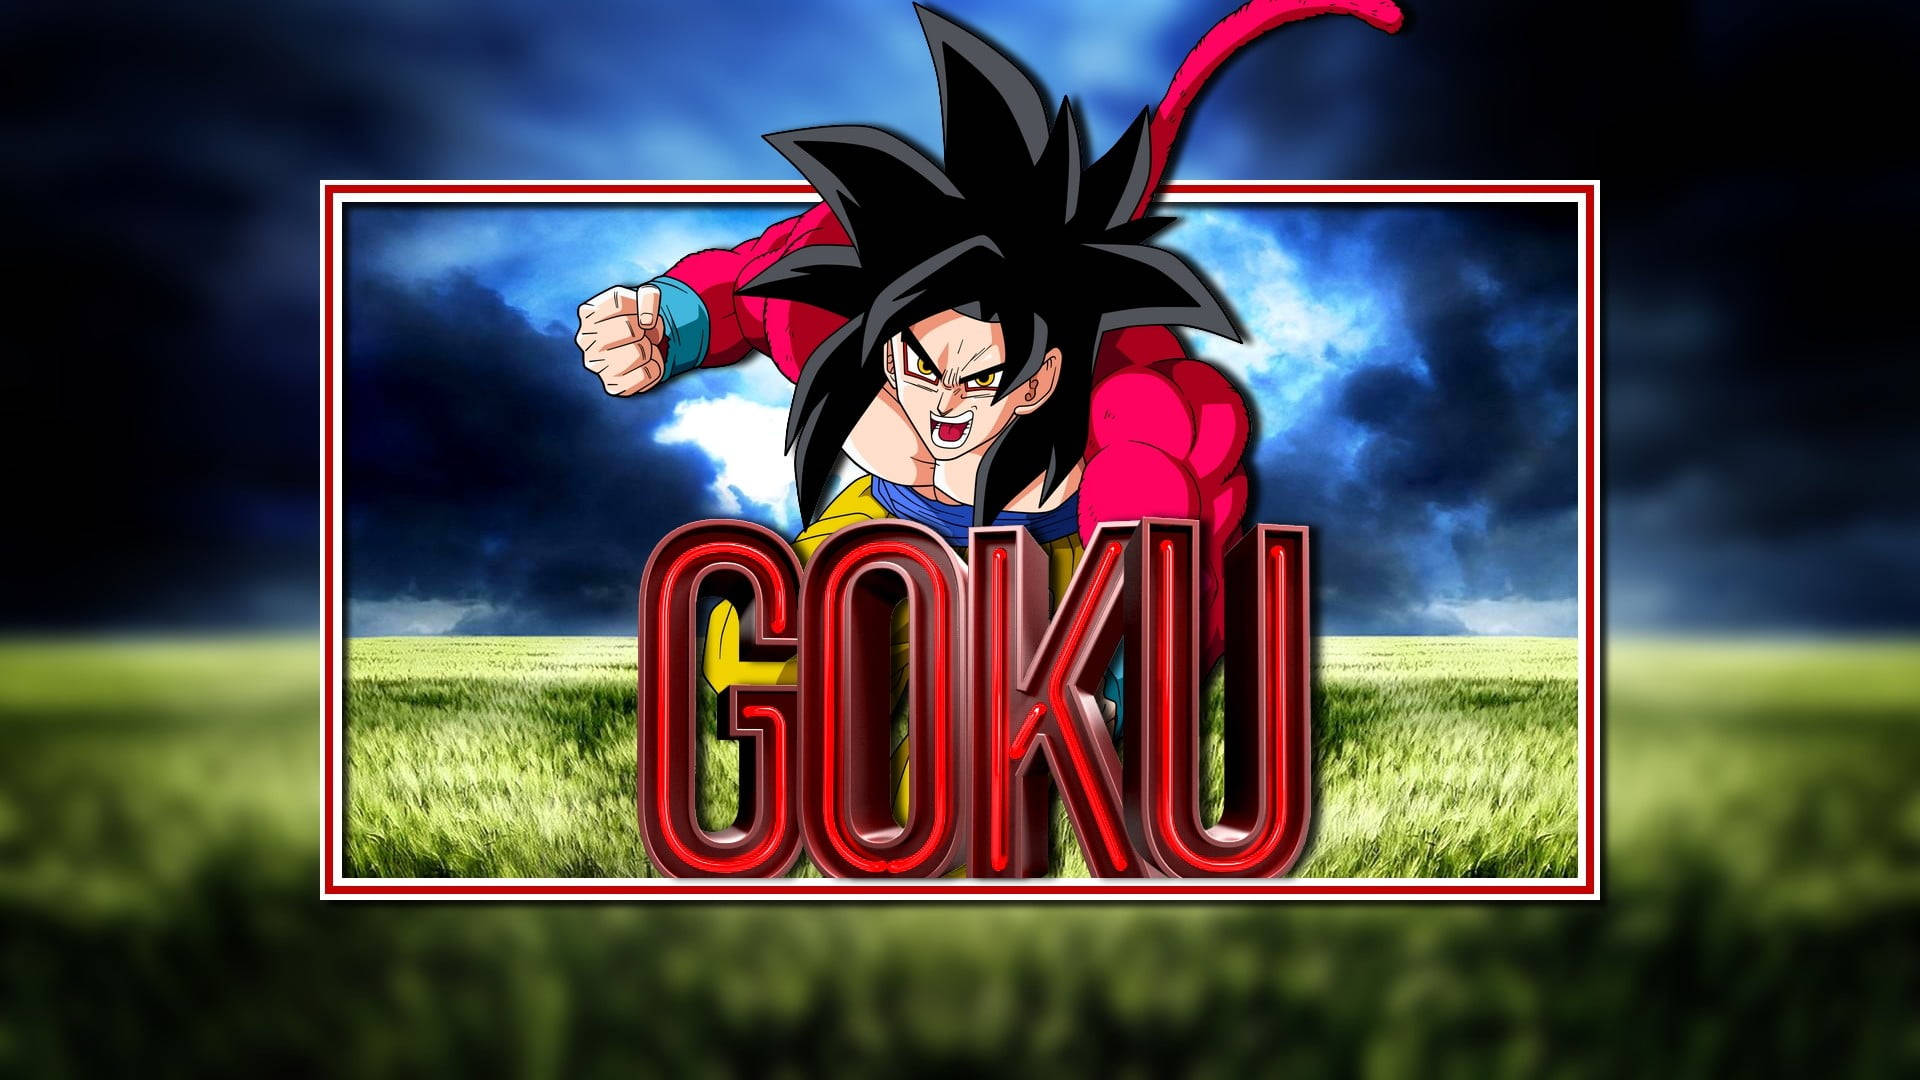 Ssj4 Goku Epic Edit Wallpaper